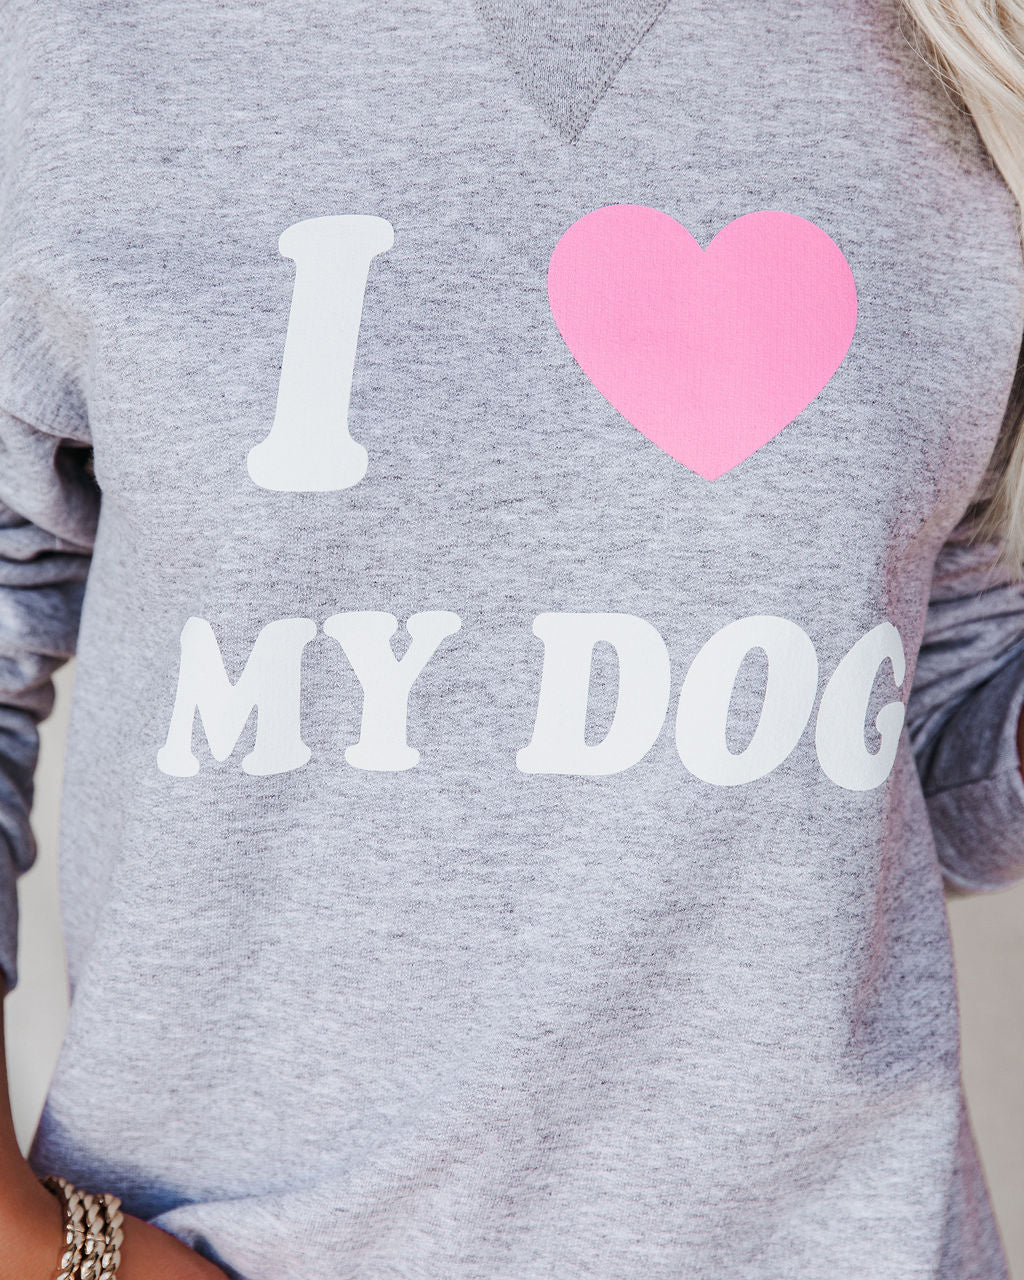 I Love My Dog Cotton Blend Sweatshirt - FINAL SALE Ins Street